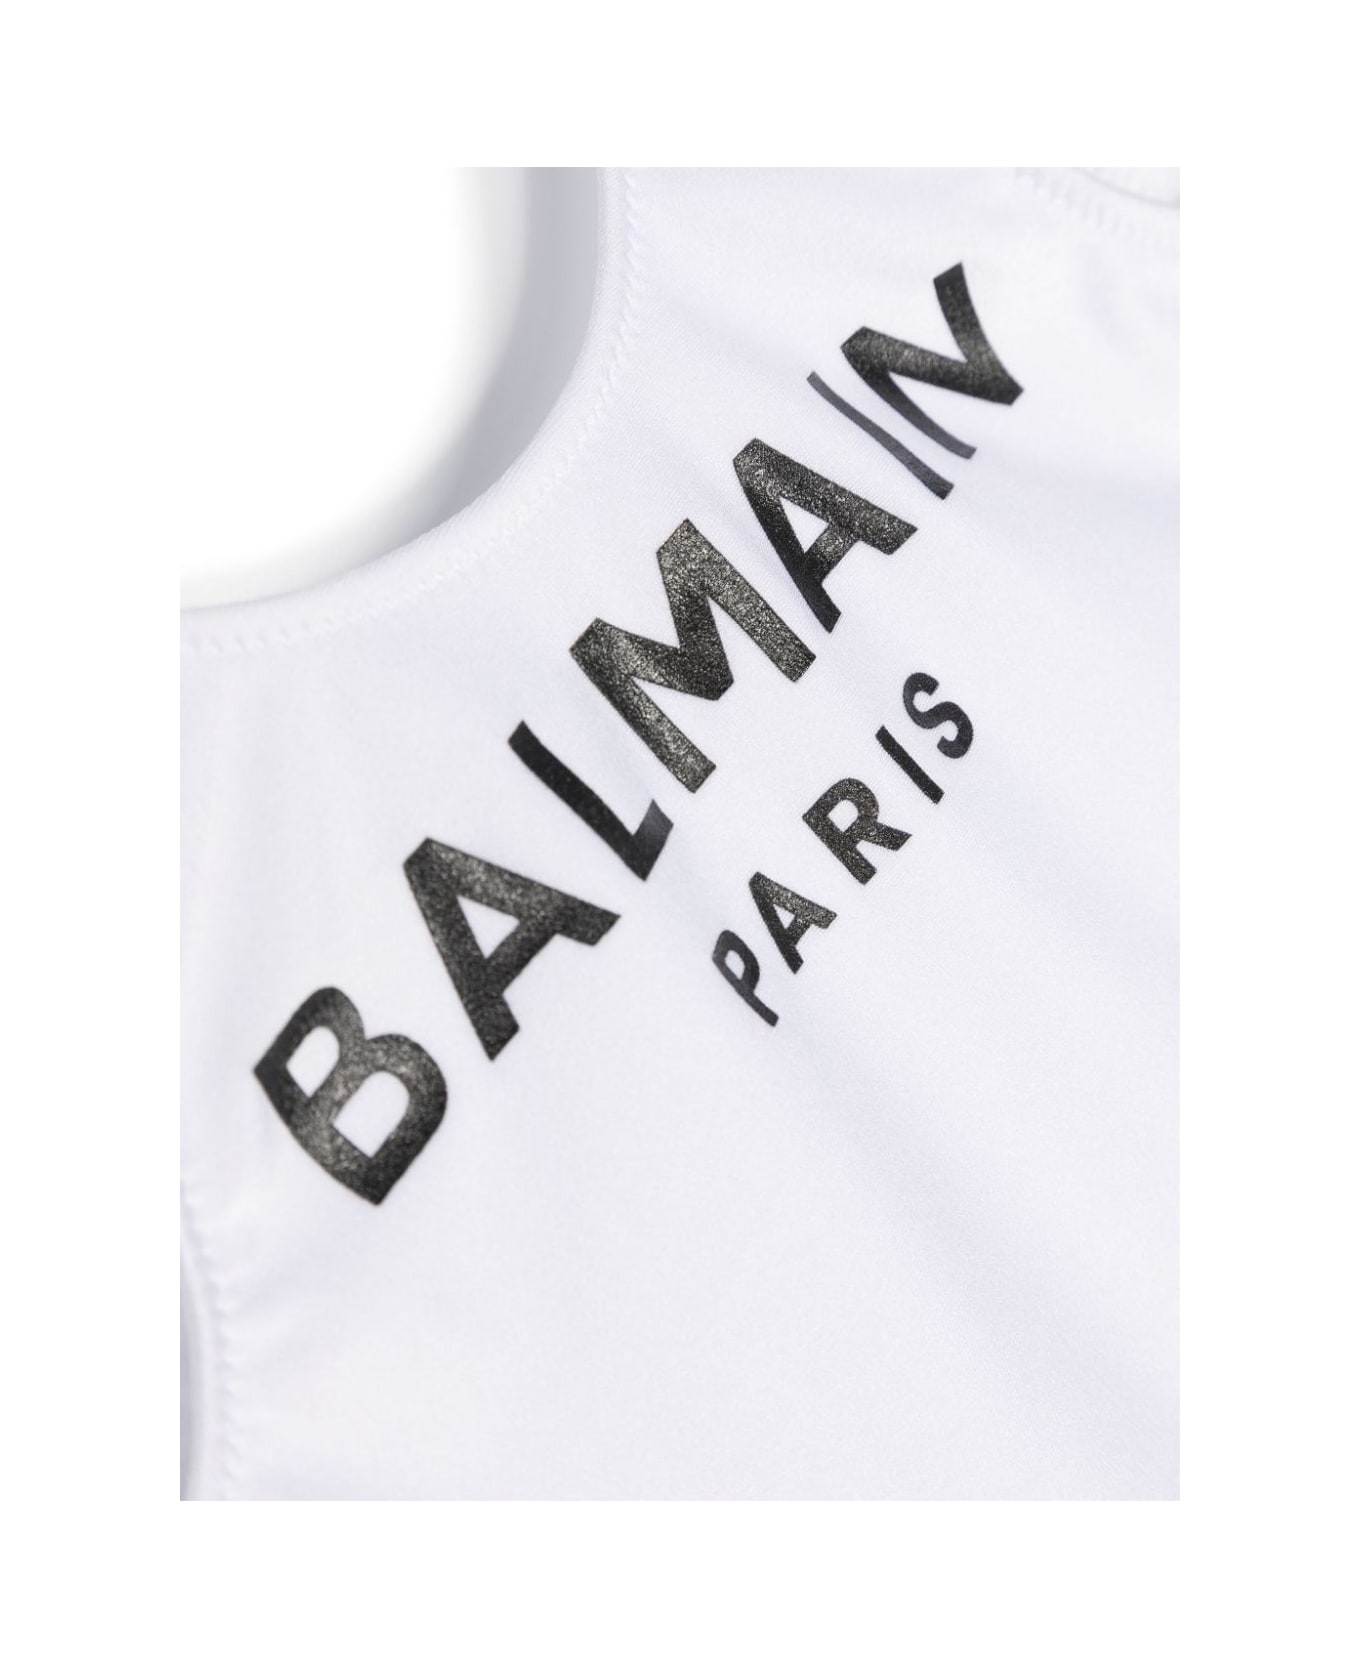 Balmain One-piece Swimsuit With Print - White 水着